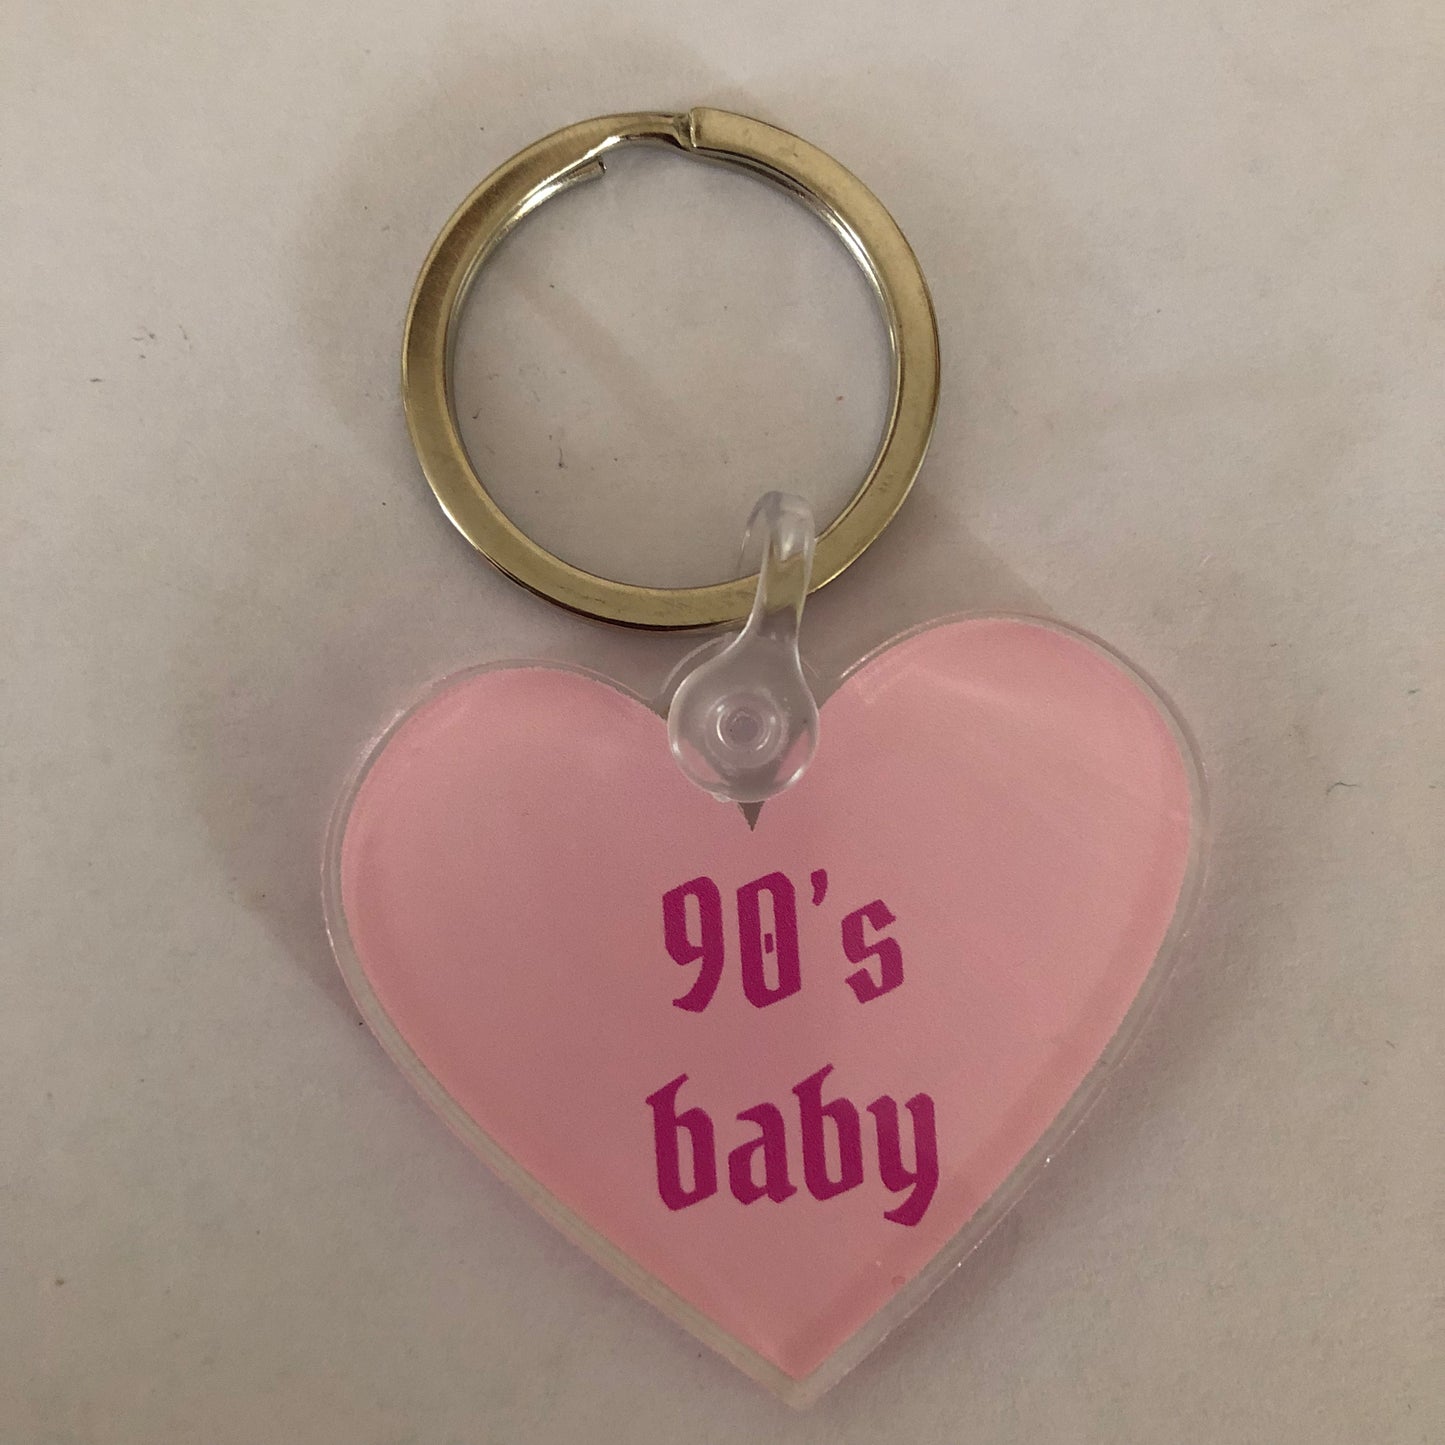 90’s baby keychain